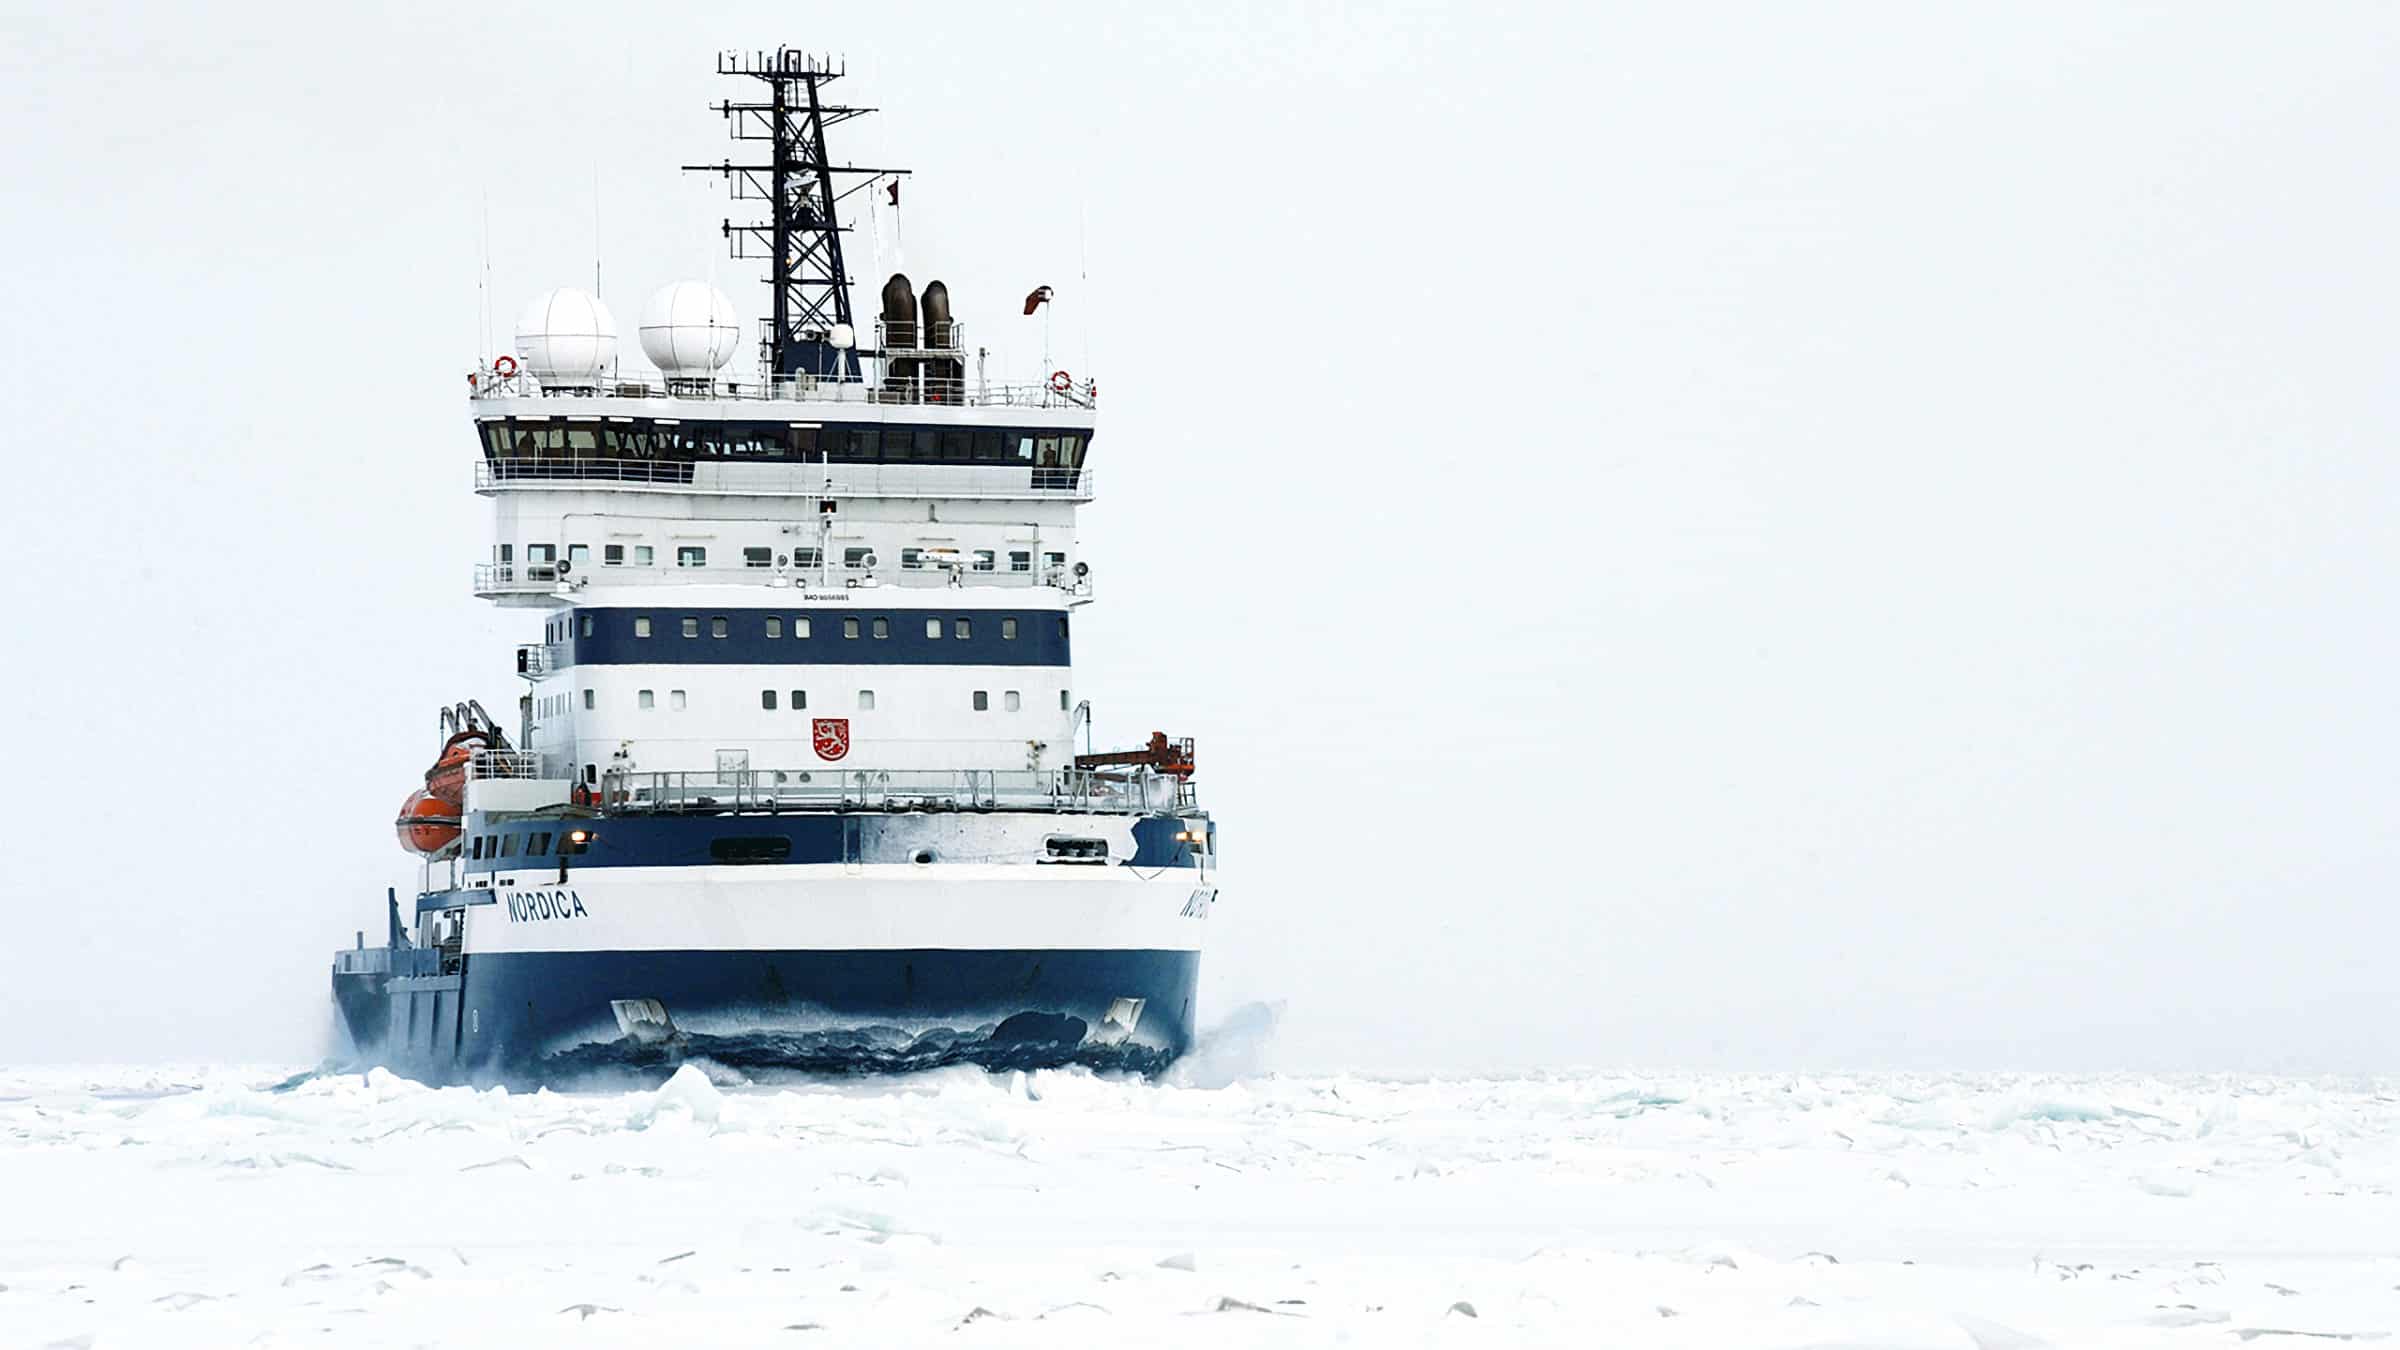 Arctia’s MSV Nordica is a powerful icebreaker 